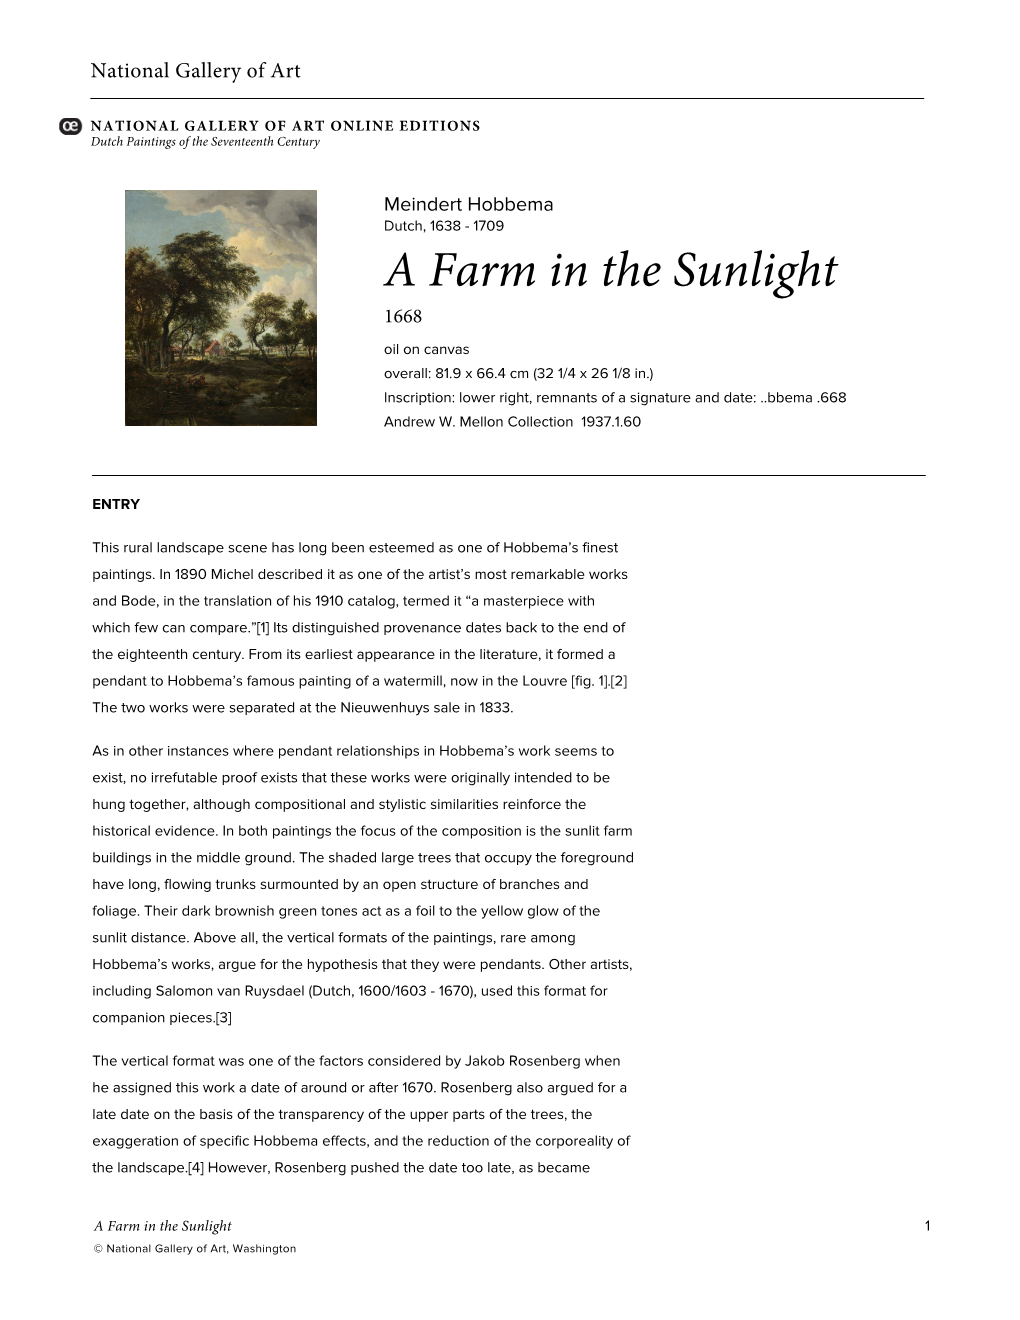 A Farm in the Sunlight